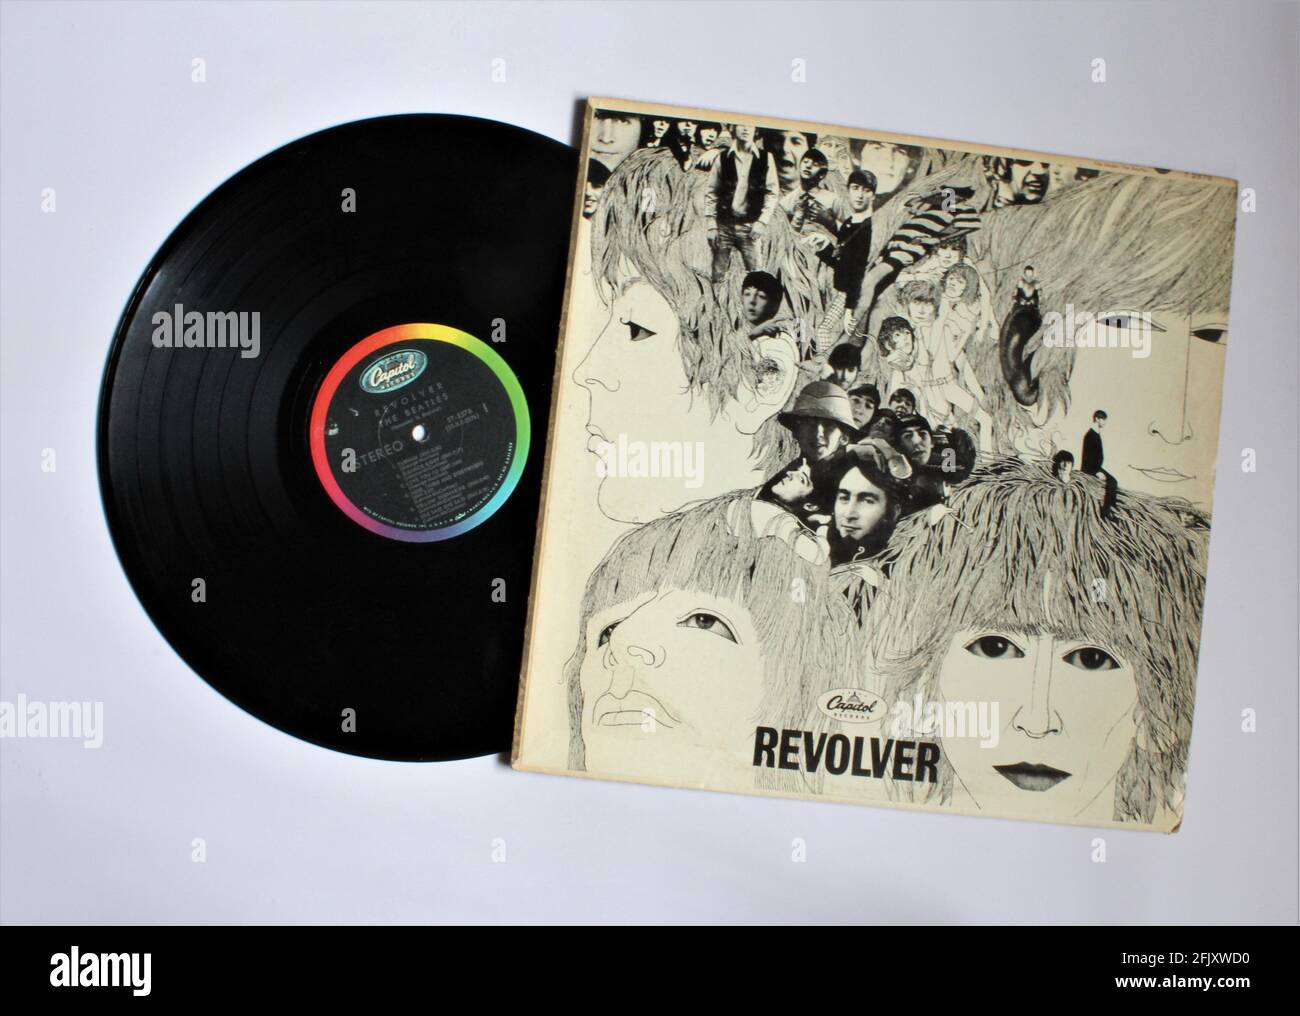 English rock band The Beatles music album on vinyl record LP disc. Titled: Revolver Stock Photo